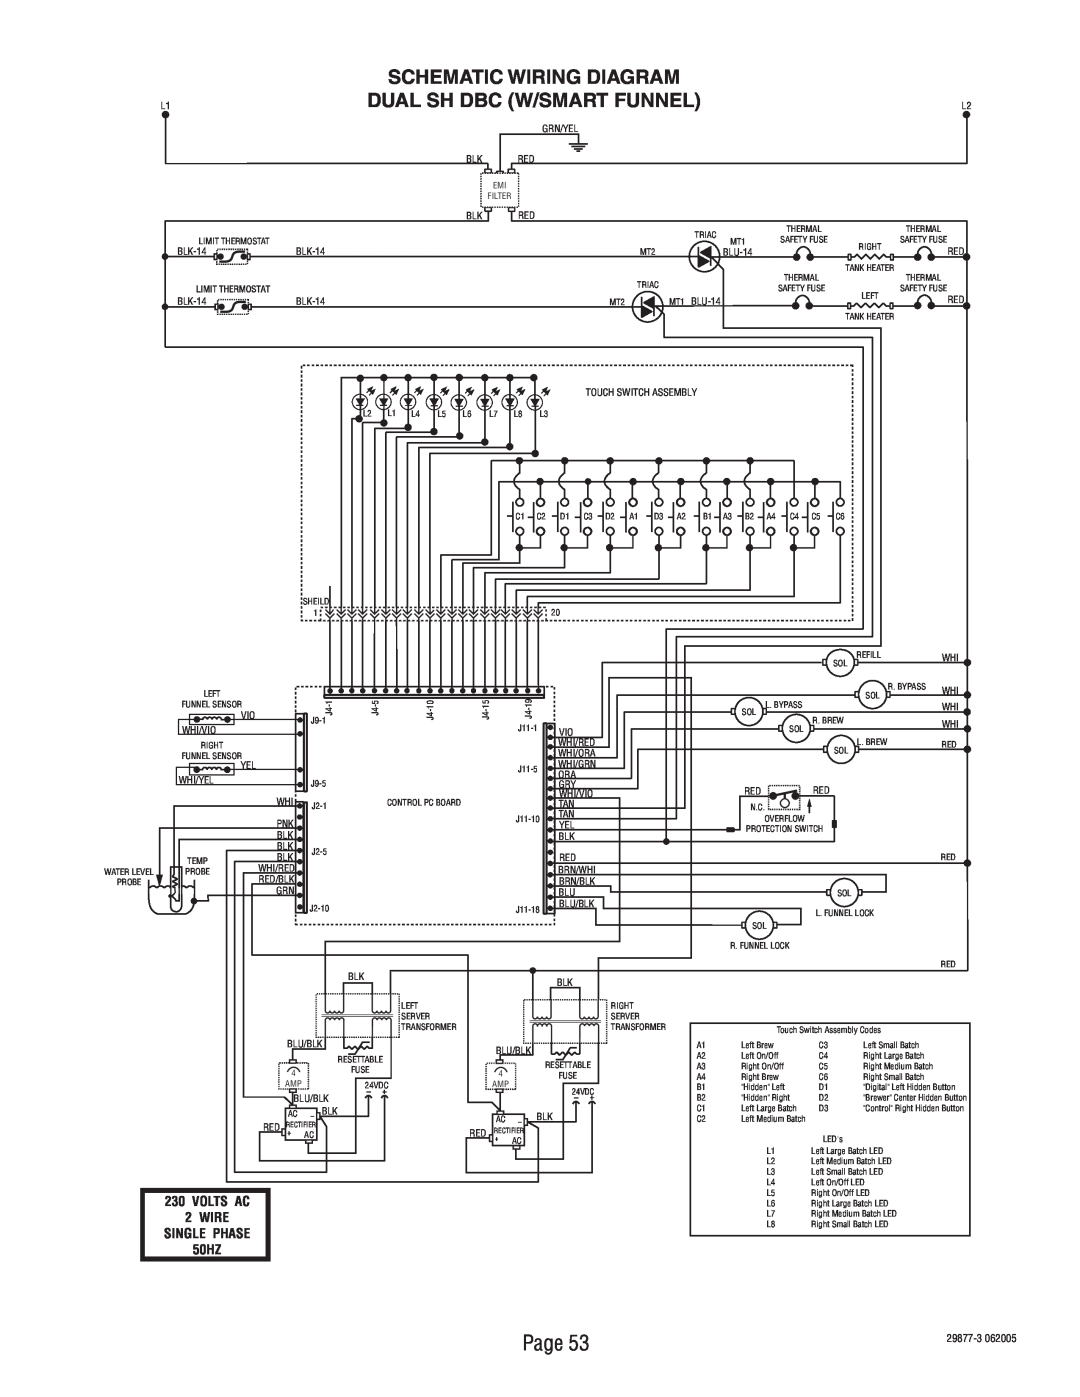 Bunn S/N DUAL068000 Schematic Wiring Diagram, Dual Sh Dbc W/Smart Funnel, VOLTS AC 2 WIRE SINGLE PHASE, 50HZ, 29877-3 